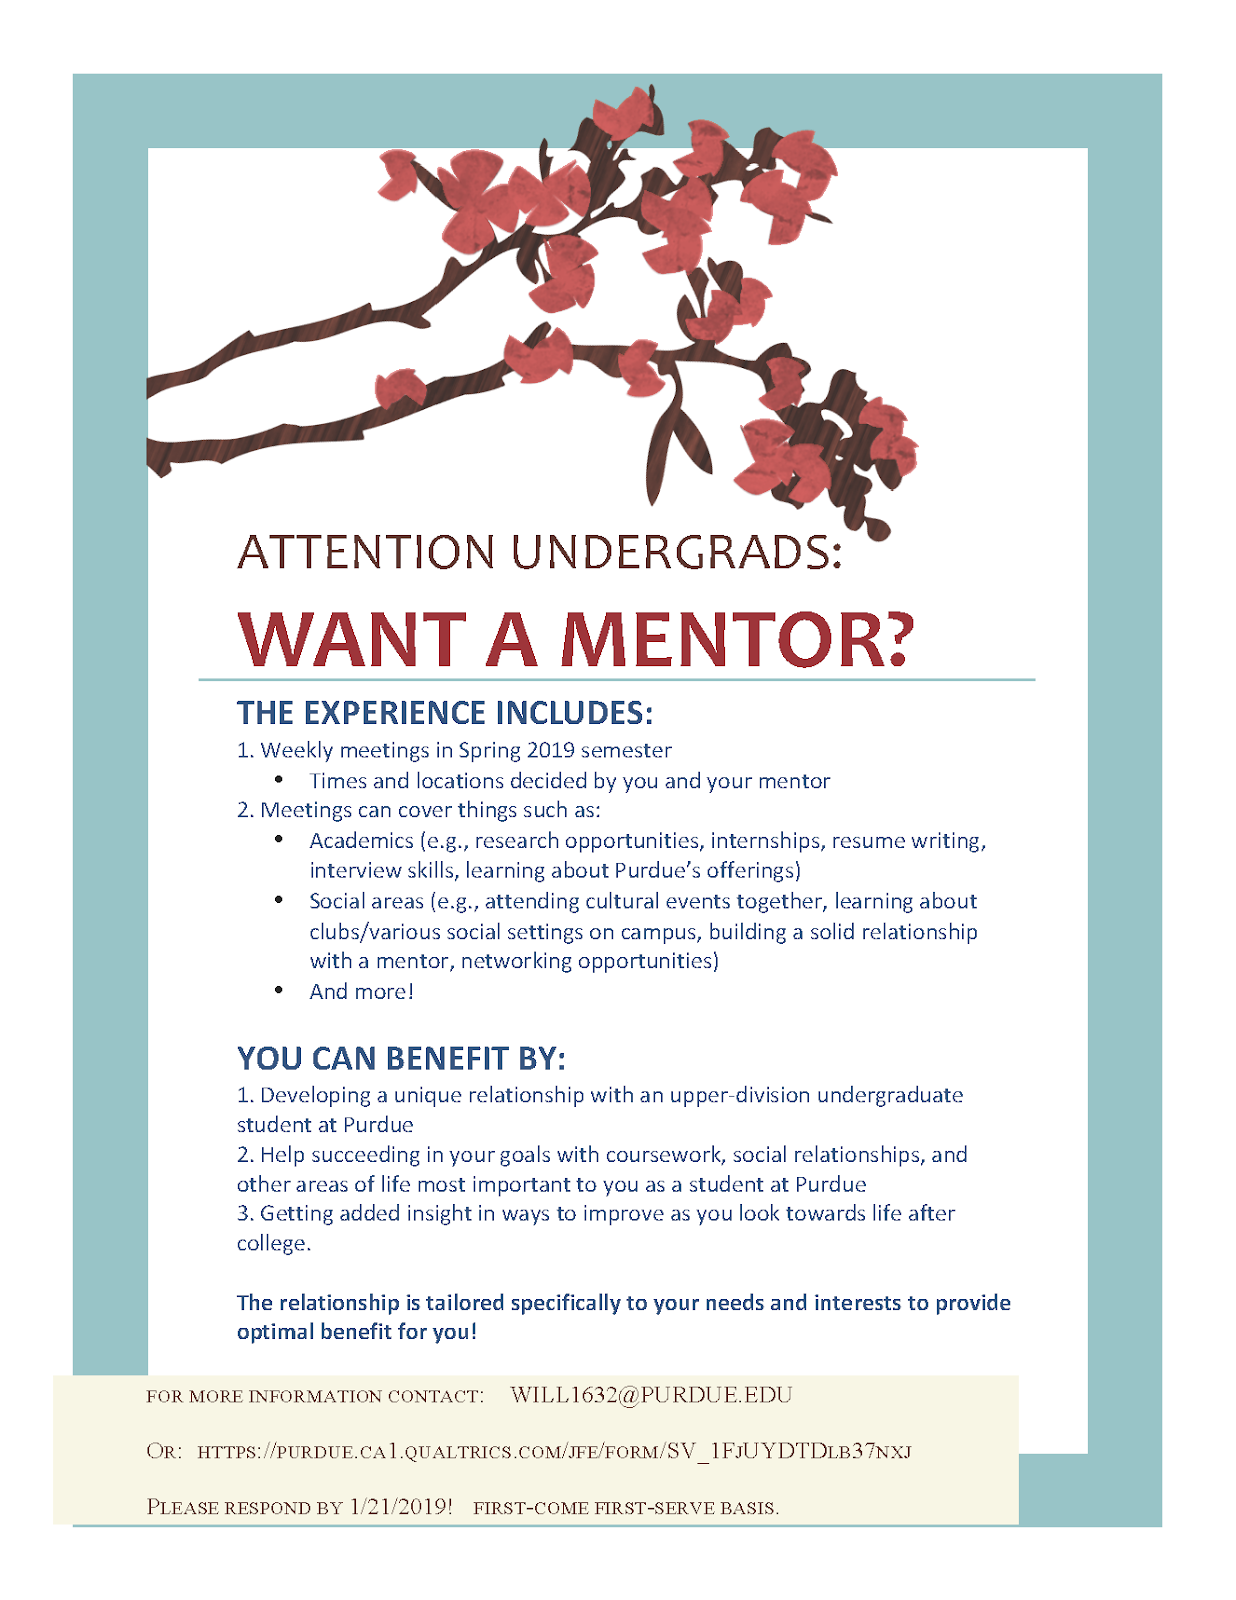 IE Undergrad News Notes: Mentorship Opportunity